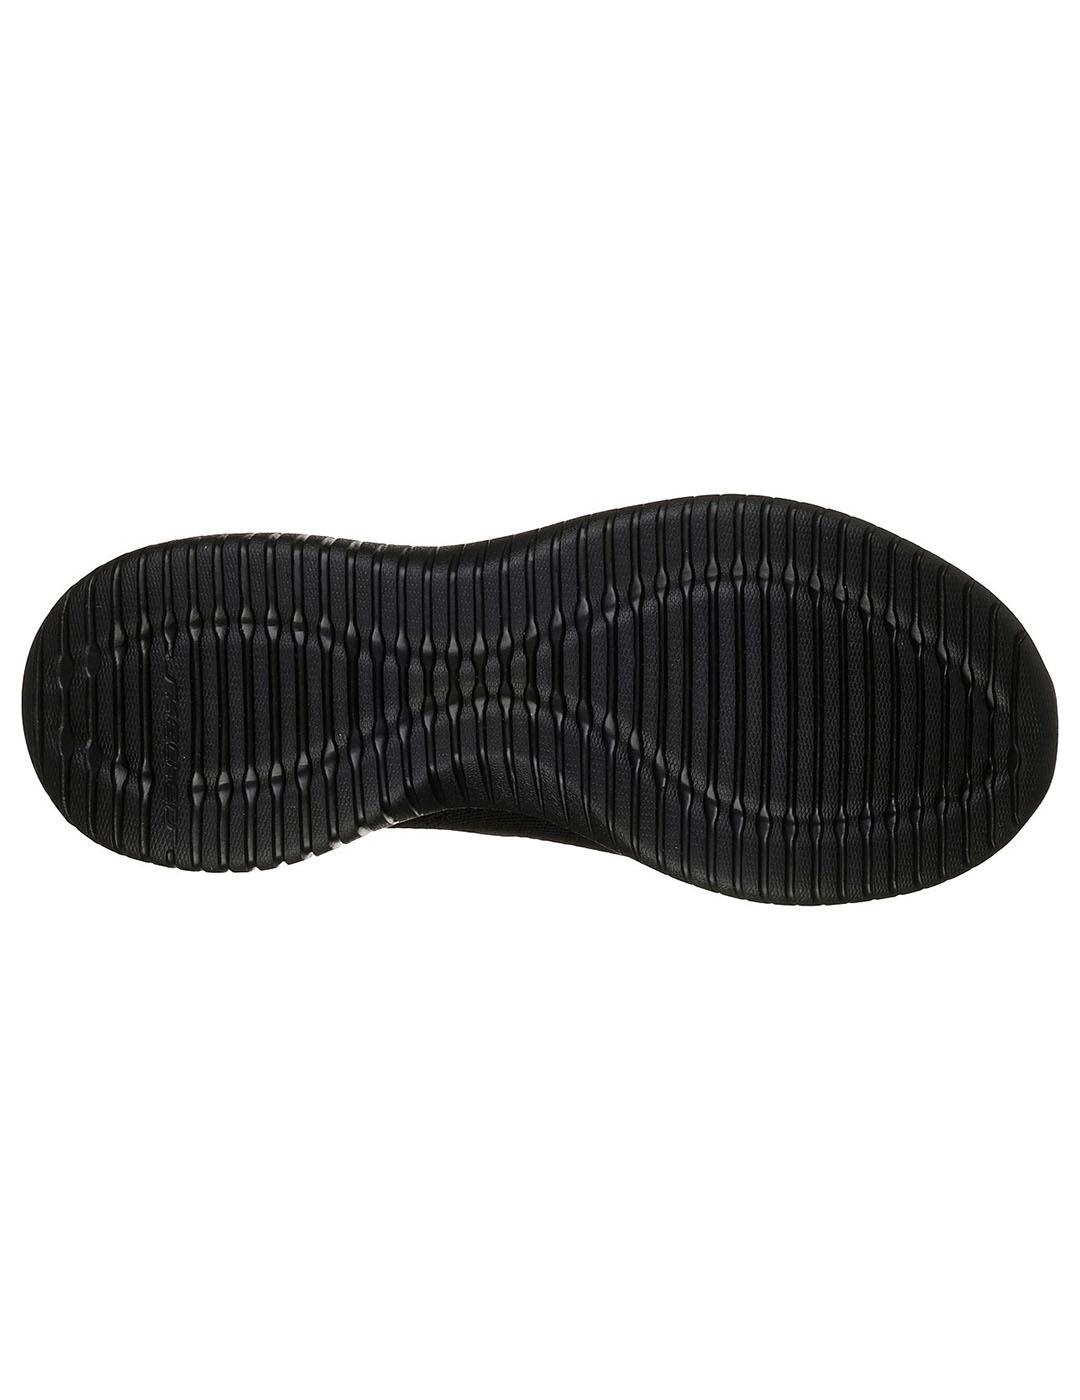 Zapatilla Mujer Skechers Ultra Flex Negro